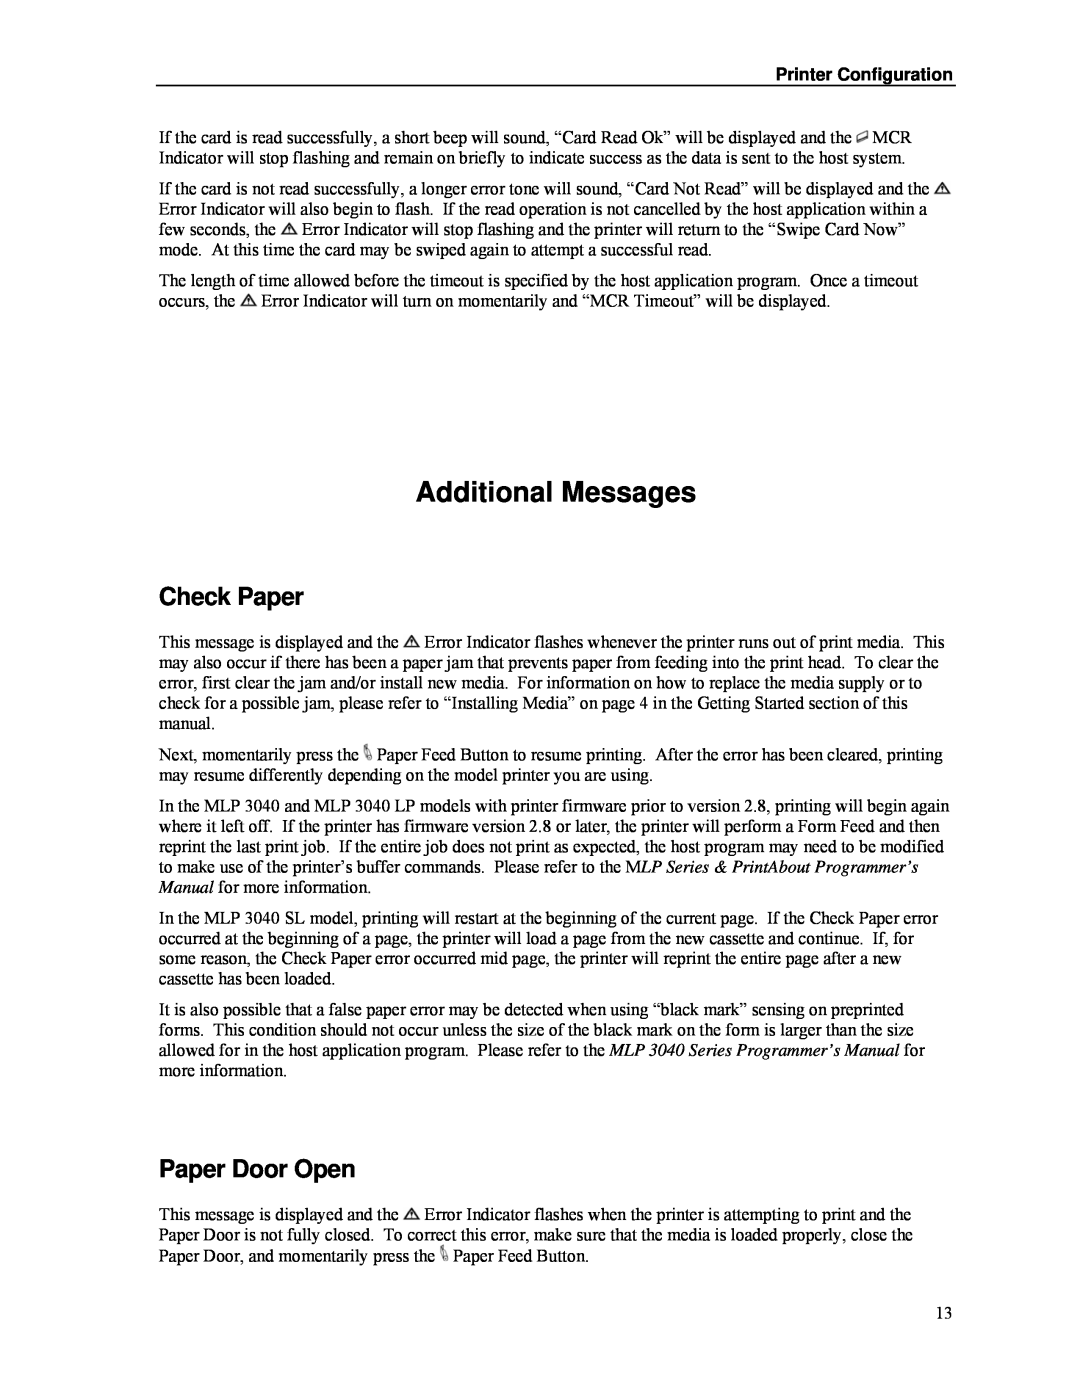 Psion Teklogix MLP 3040 Series manual Additional Messages, Check Paper, Paper Door Open, Printer Configuration 